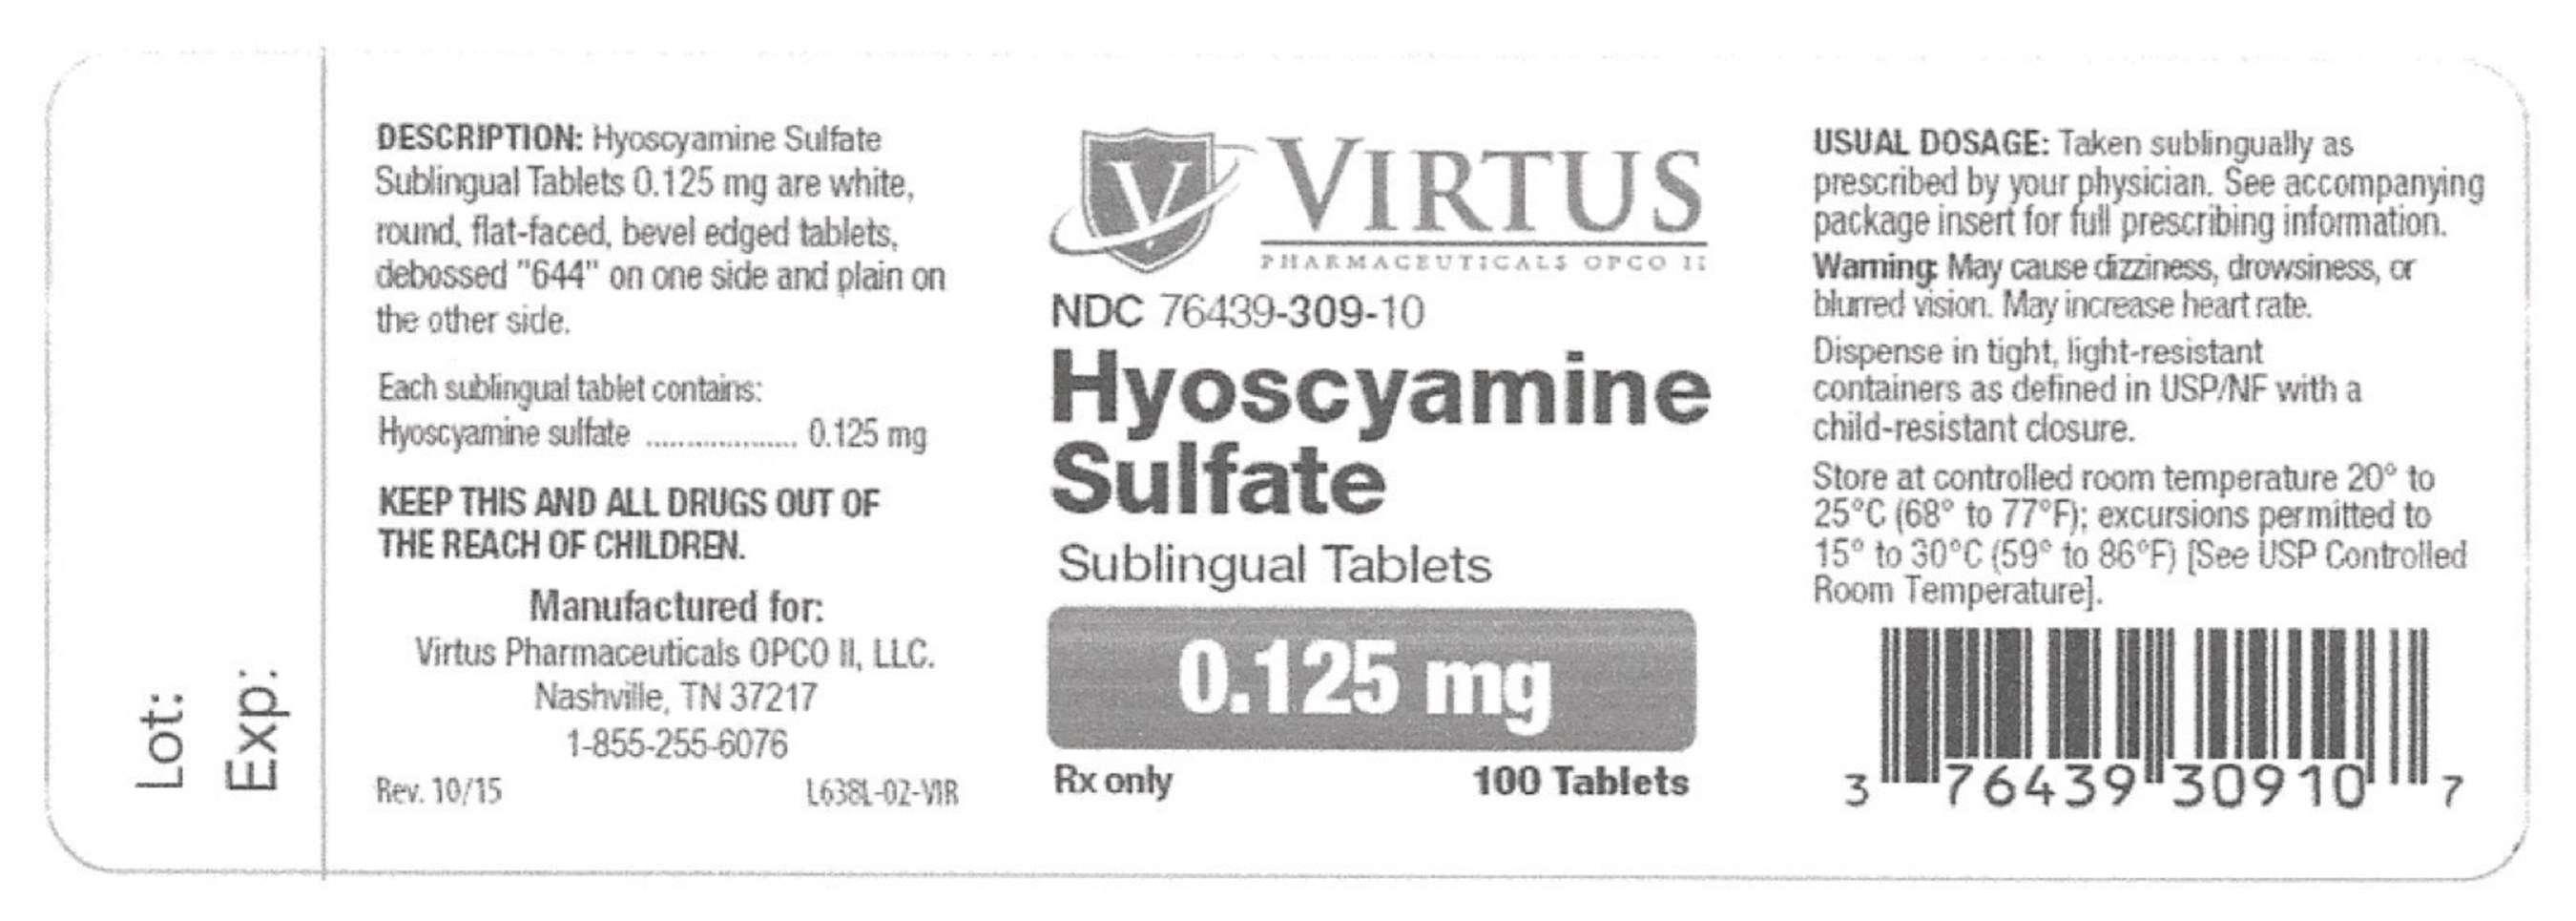 Hyoscyamine Sulfate Sublingual tablets, NDC 76439-309-10: